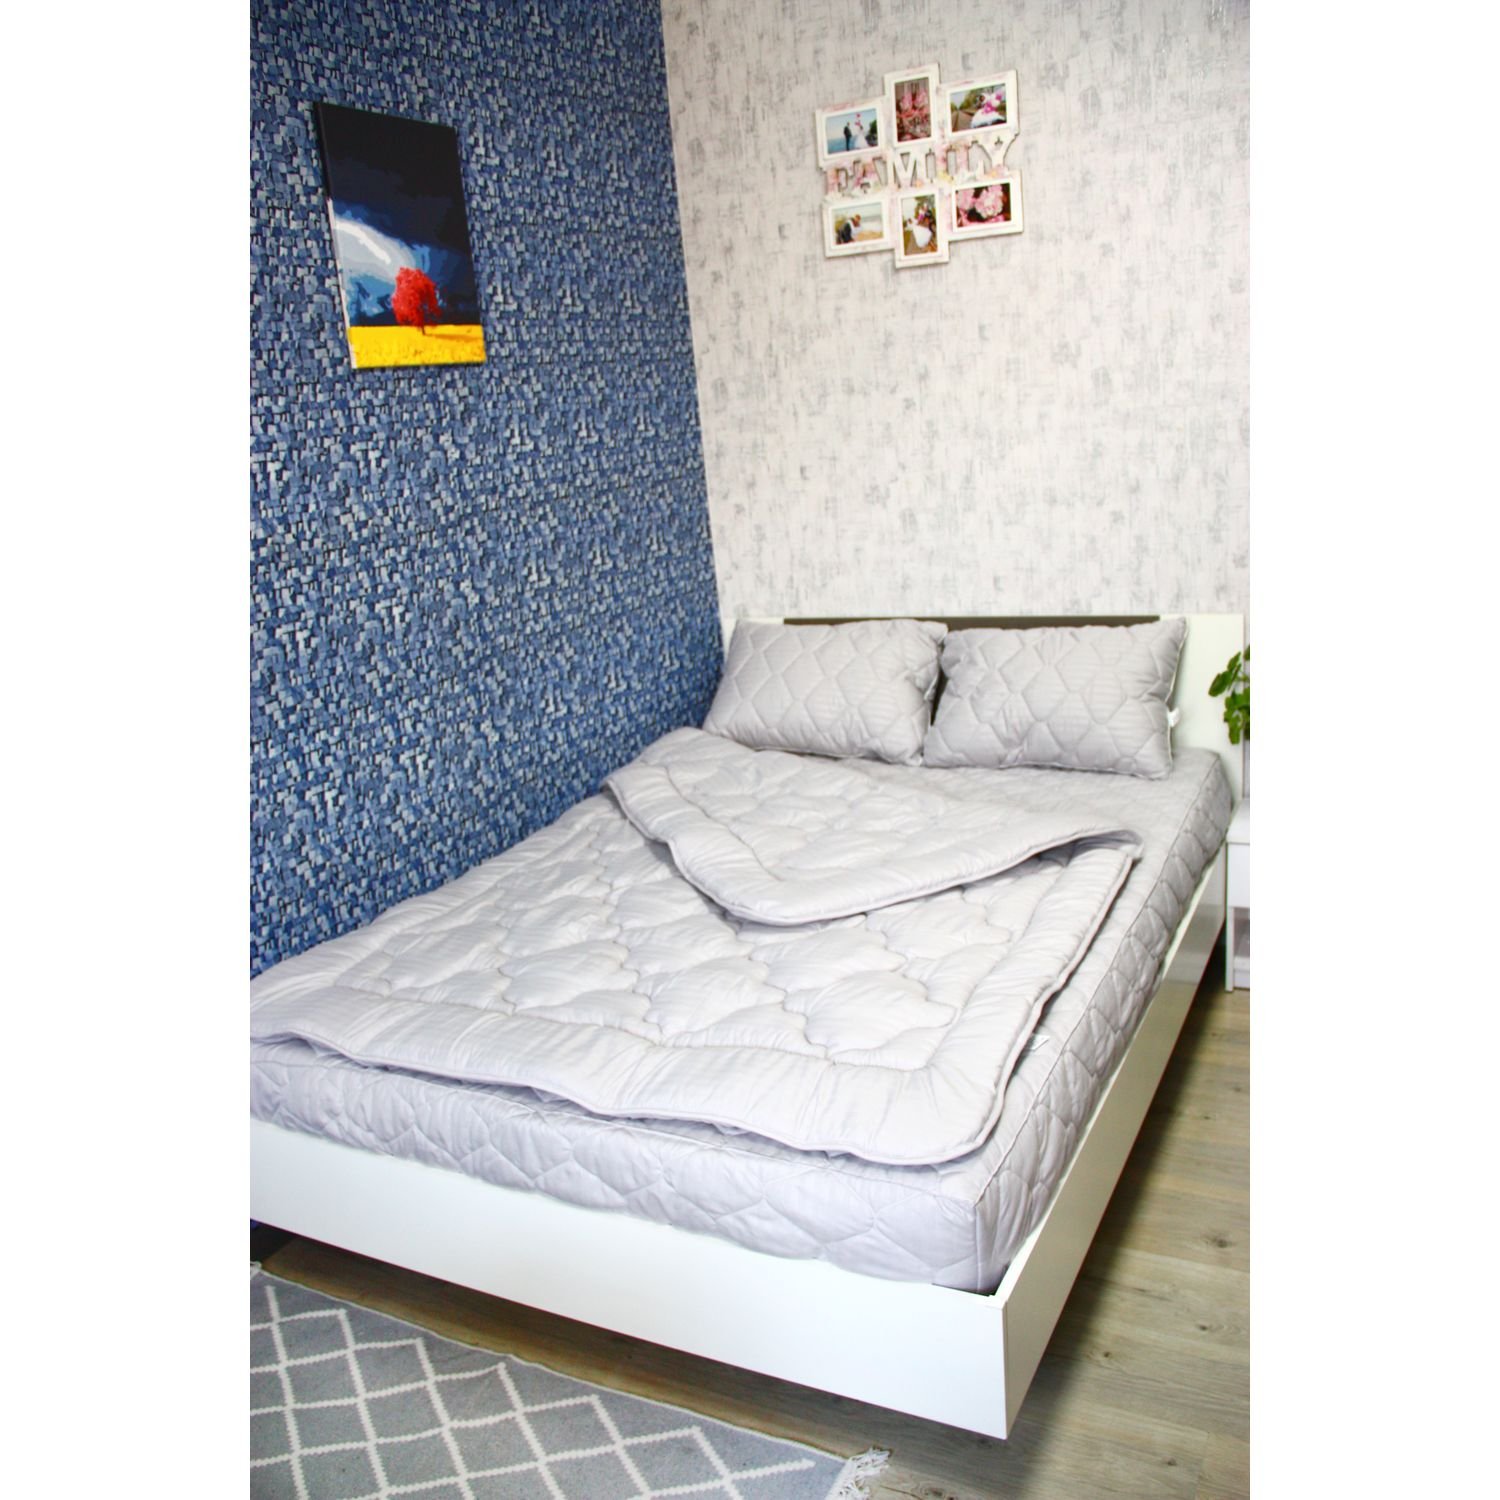 Одеяло LightHouse Soft Line Mf Stripe grey, 140х210 см, серое (602244) - фото 8